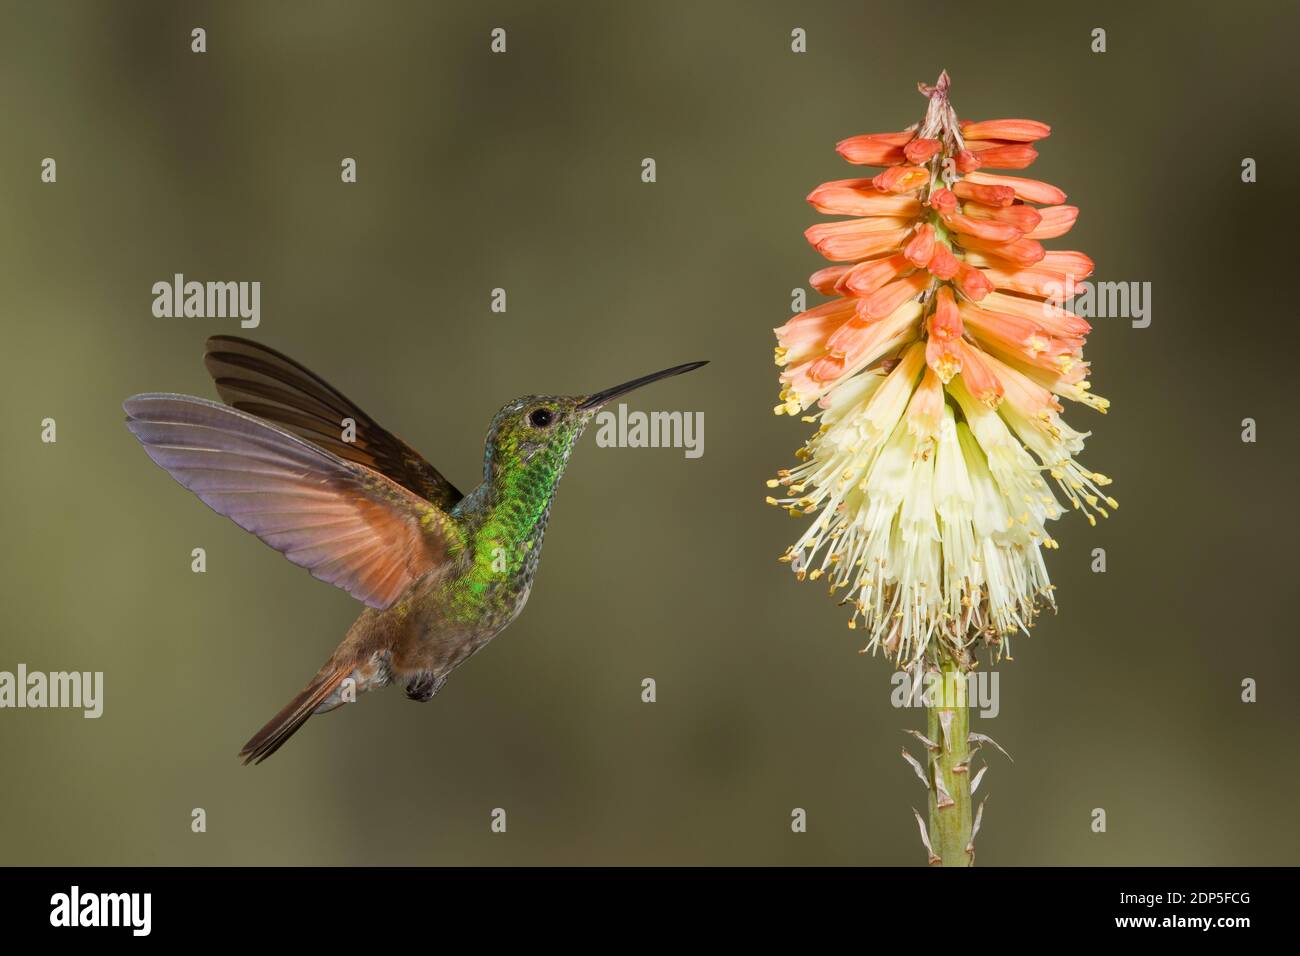 Berylline Hummingbird, Amazilia beryllina. Feeding at Red Hot Poker Flower, Kniphofia sp., Asphodelaceae. Stock Photo